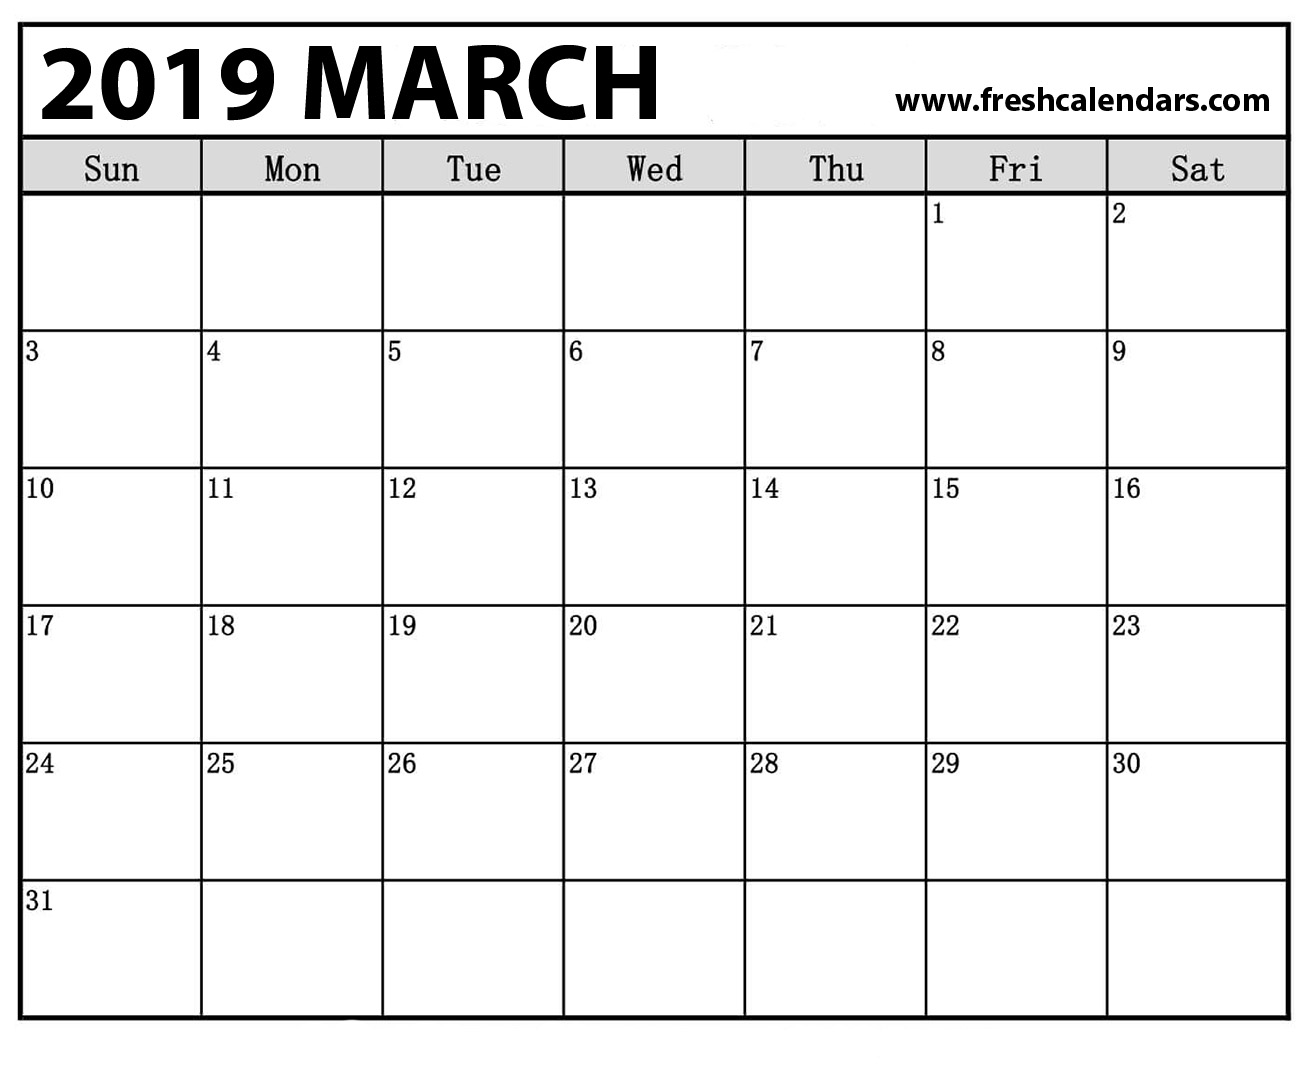 2019 March Calendars